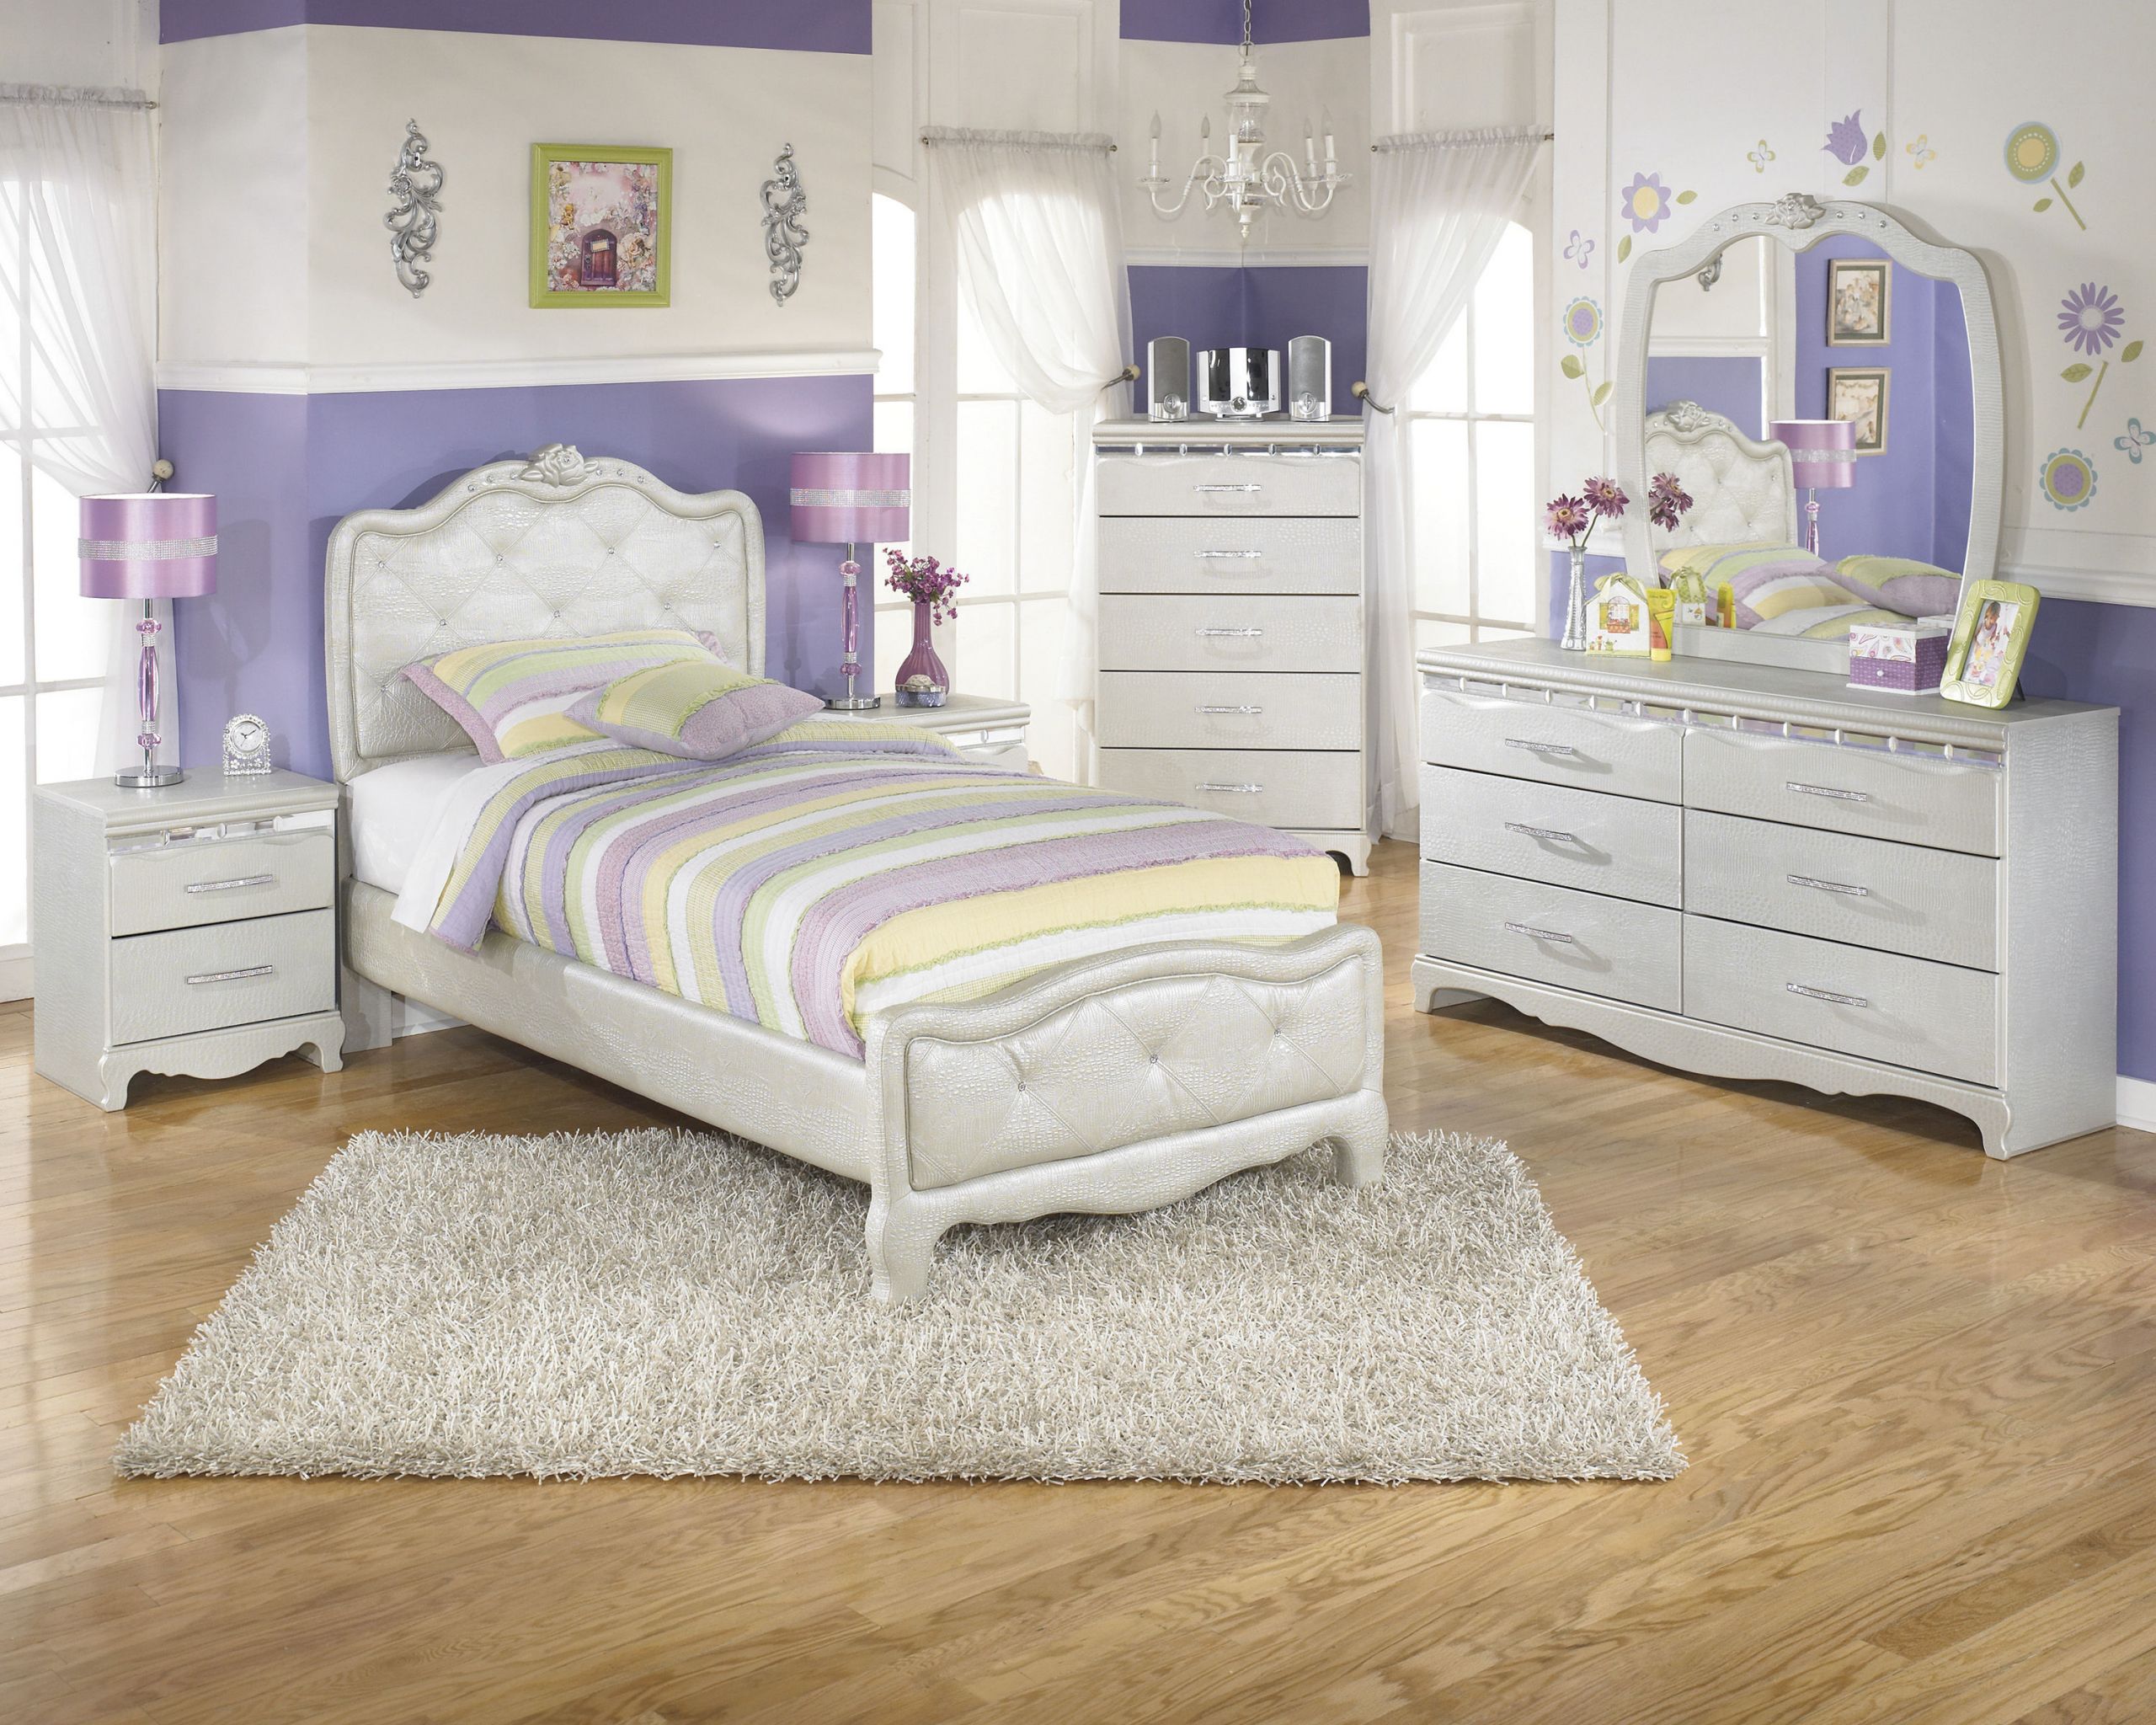 Girls Bedroom Sets Furniture
 Ashley Furniture Zarollina 2pc Kids Bedroom Set with Twin